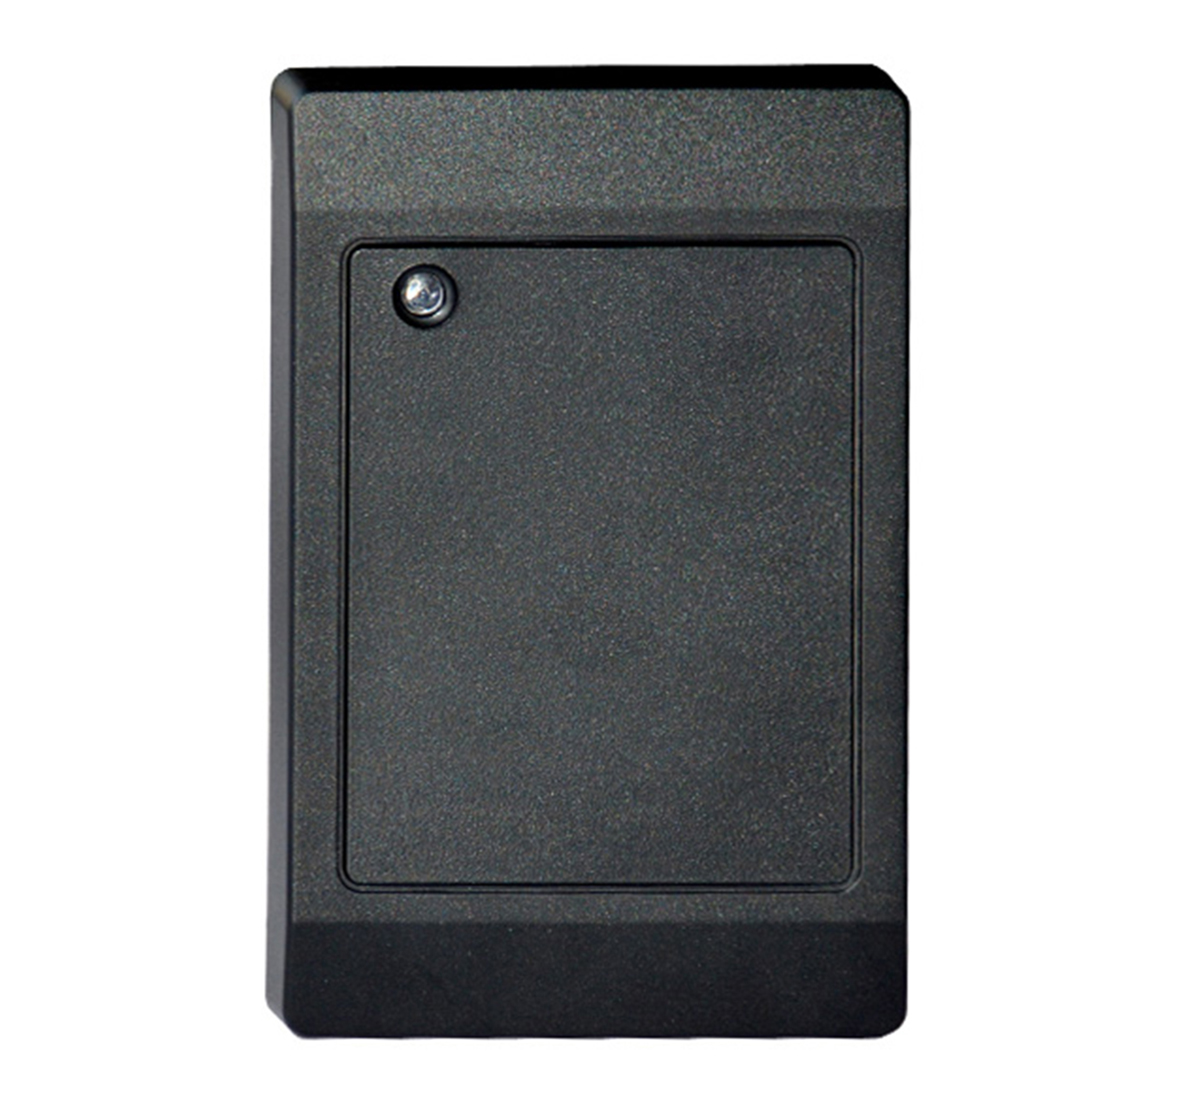 Black rectangular RFID door lock lift reader 